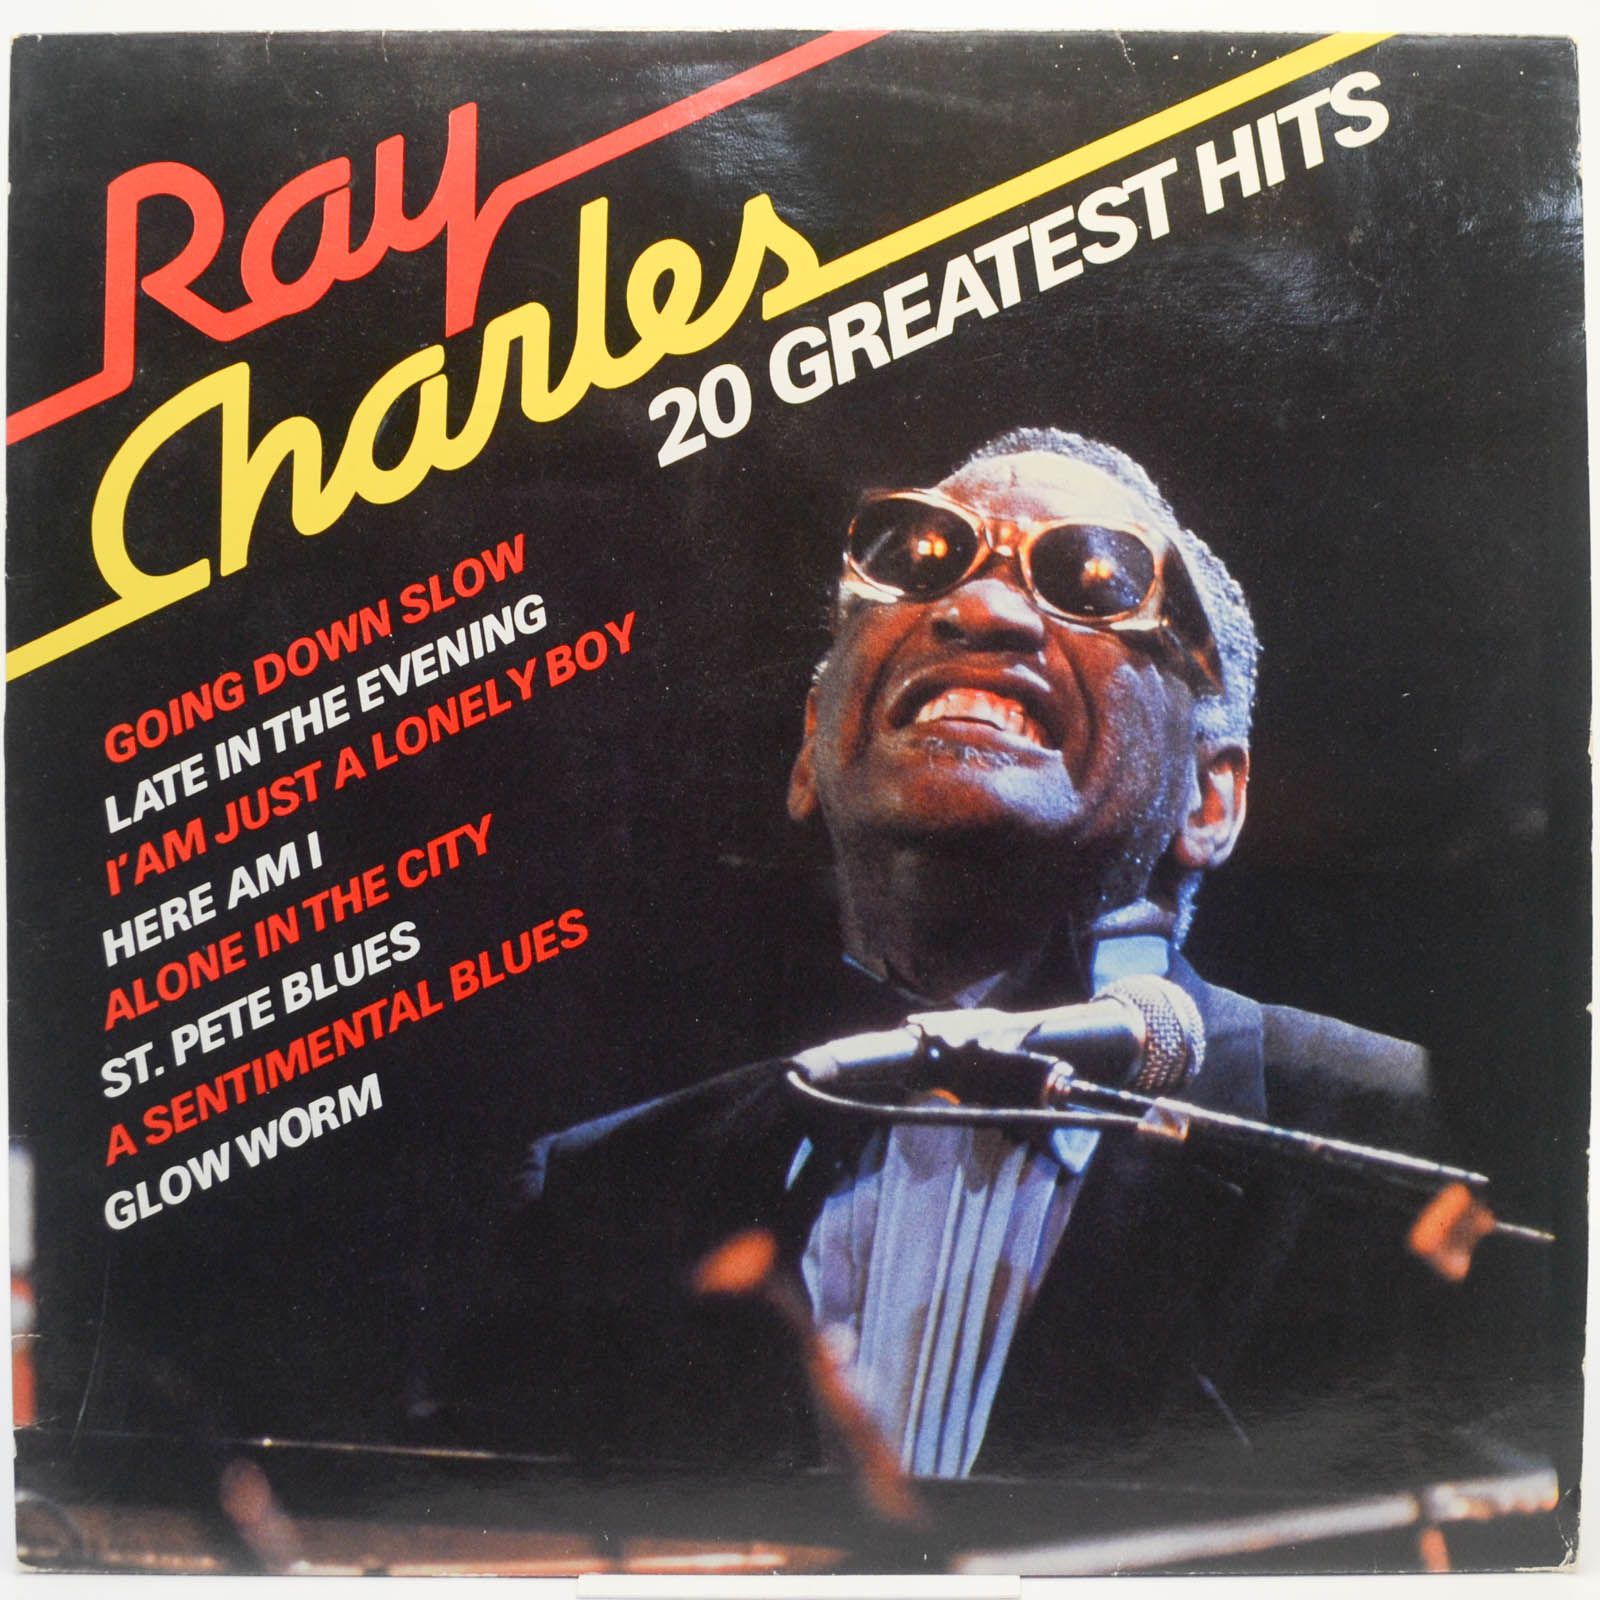 Ray Charles — 20 Greatest Hits, 1978